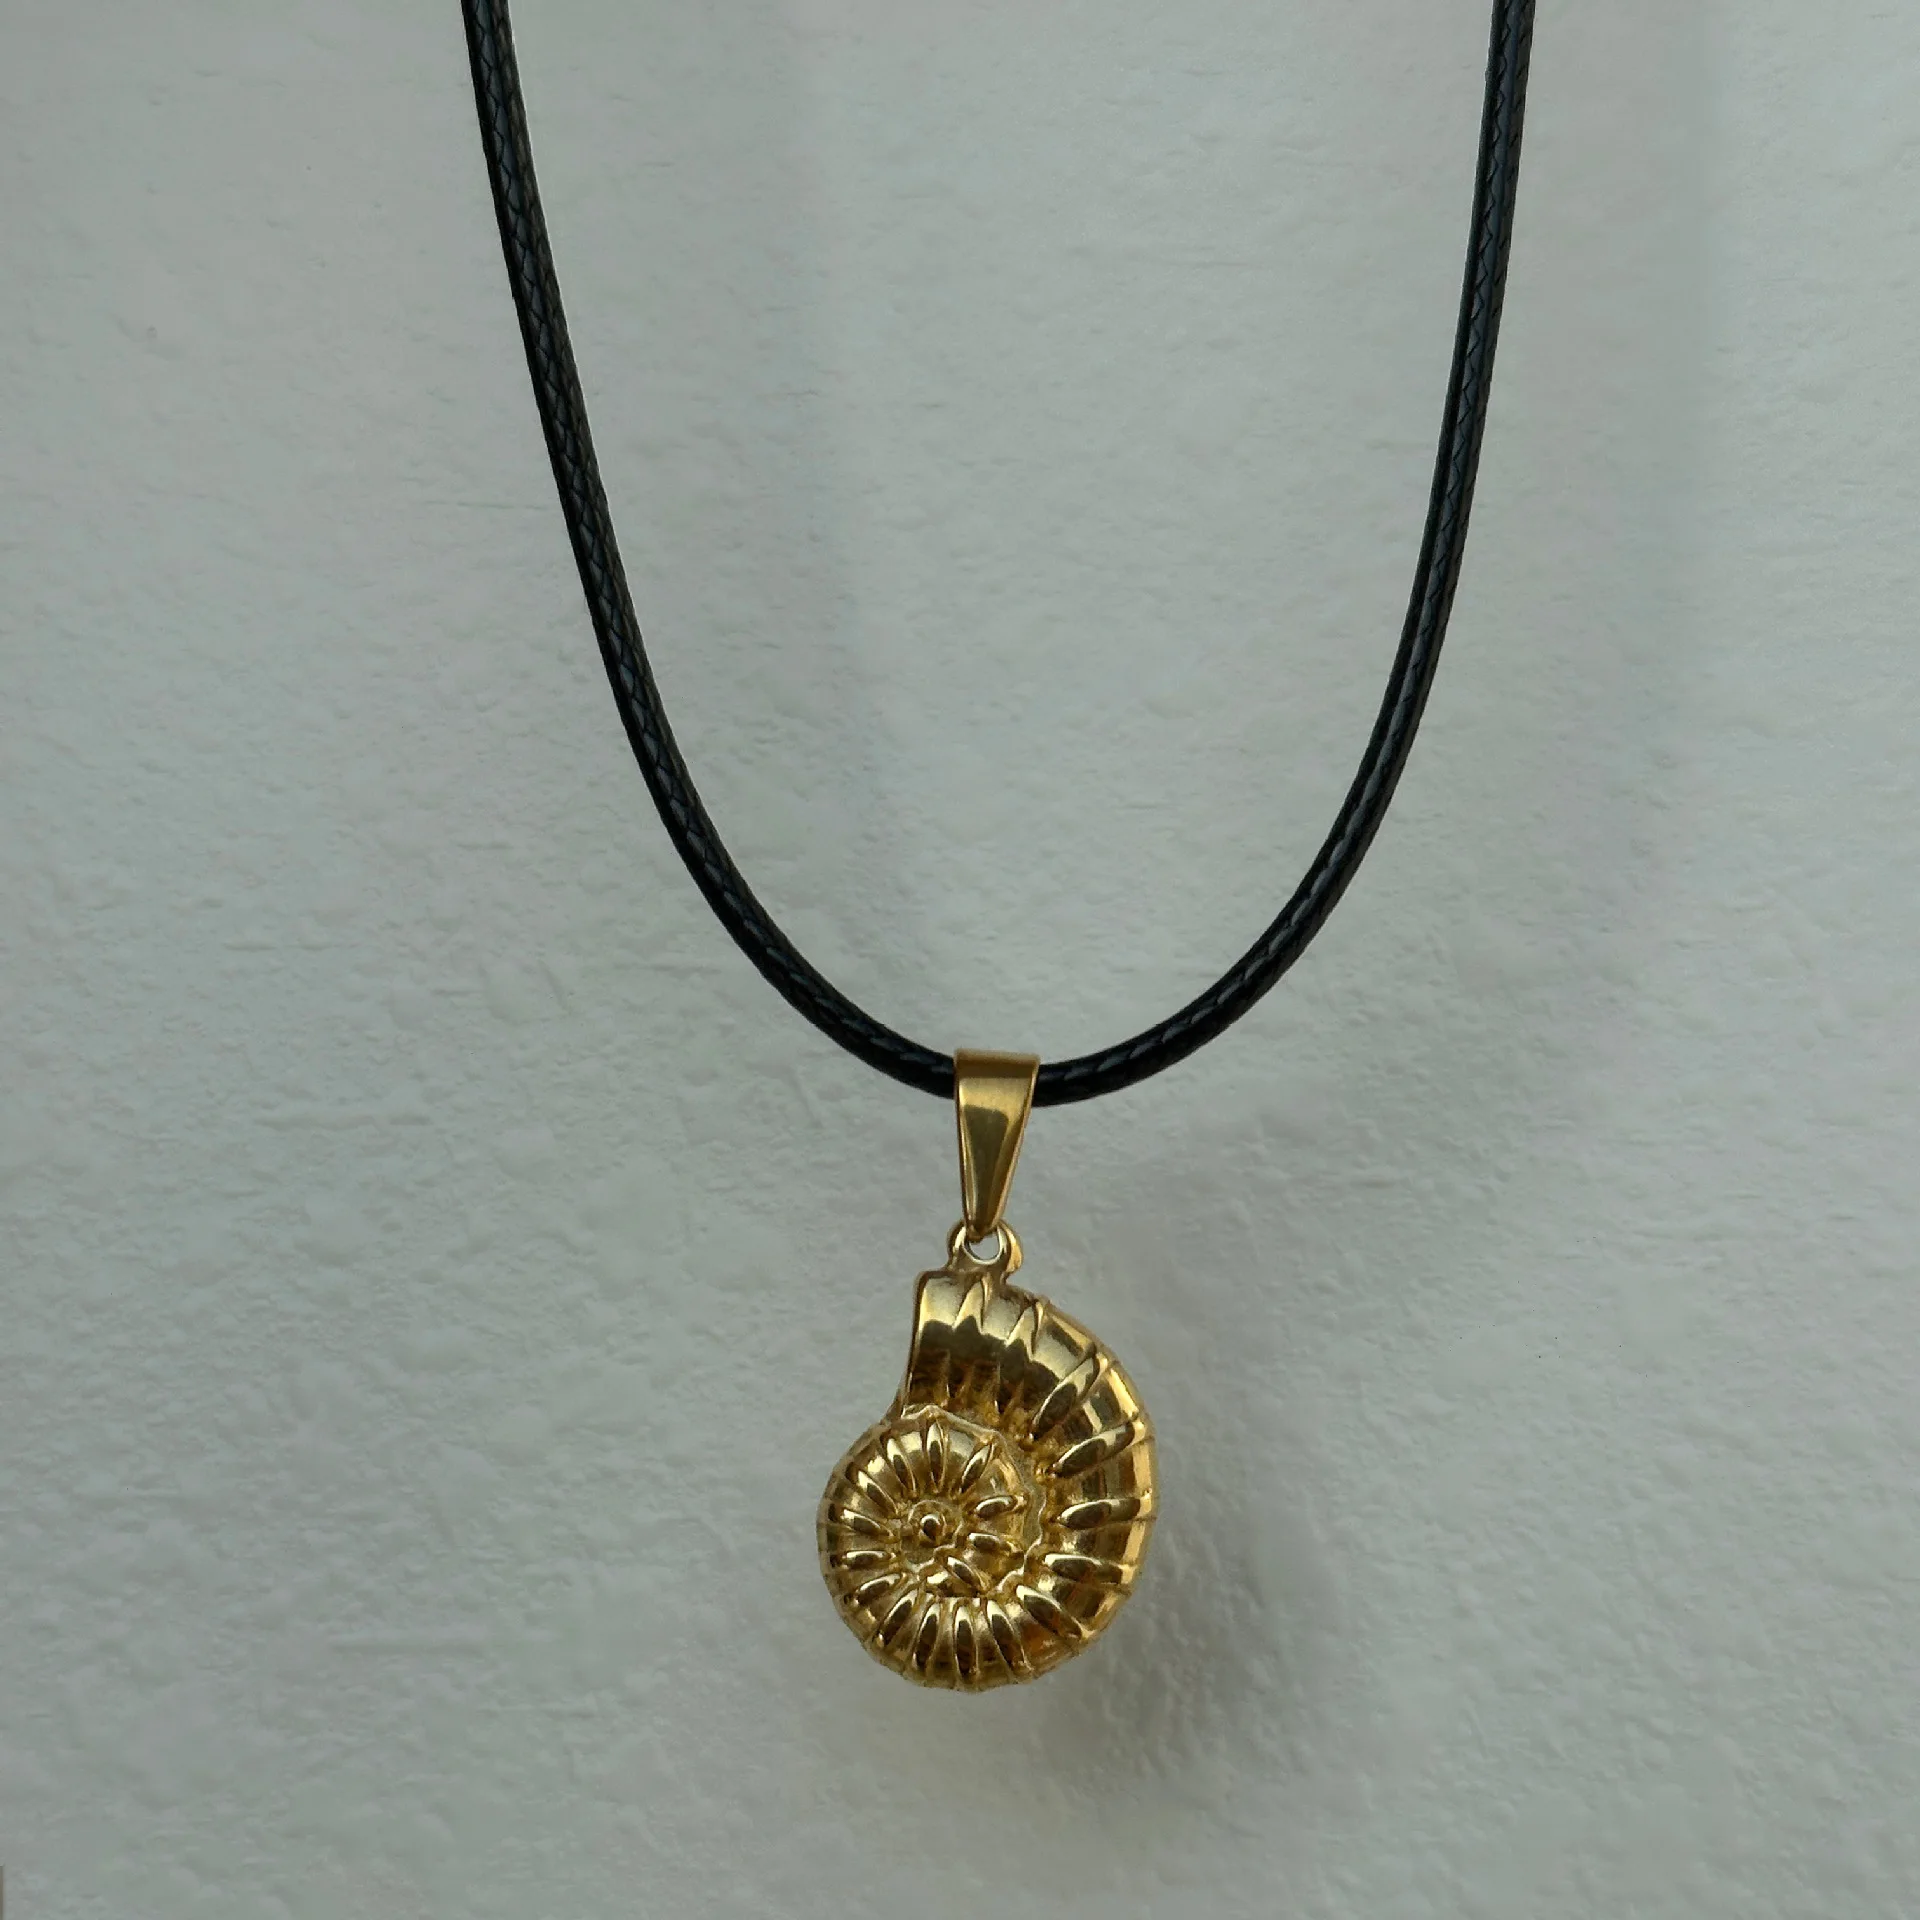 black cord necklace conch shell pendant